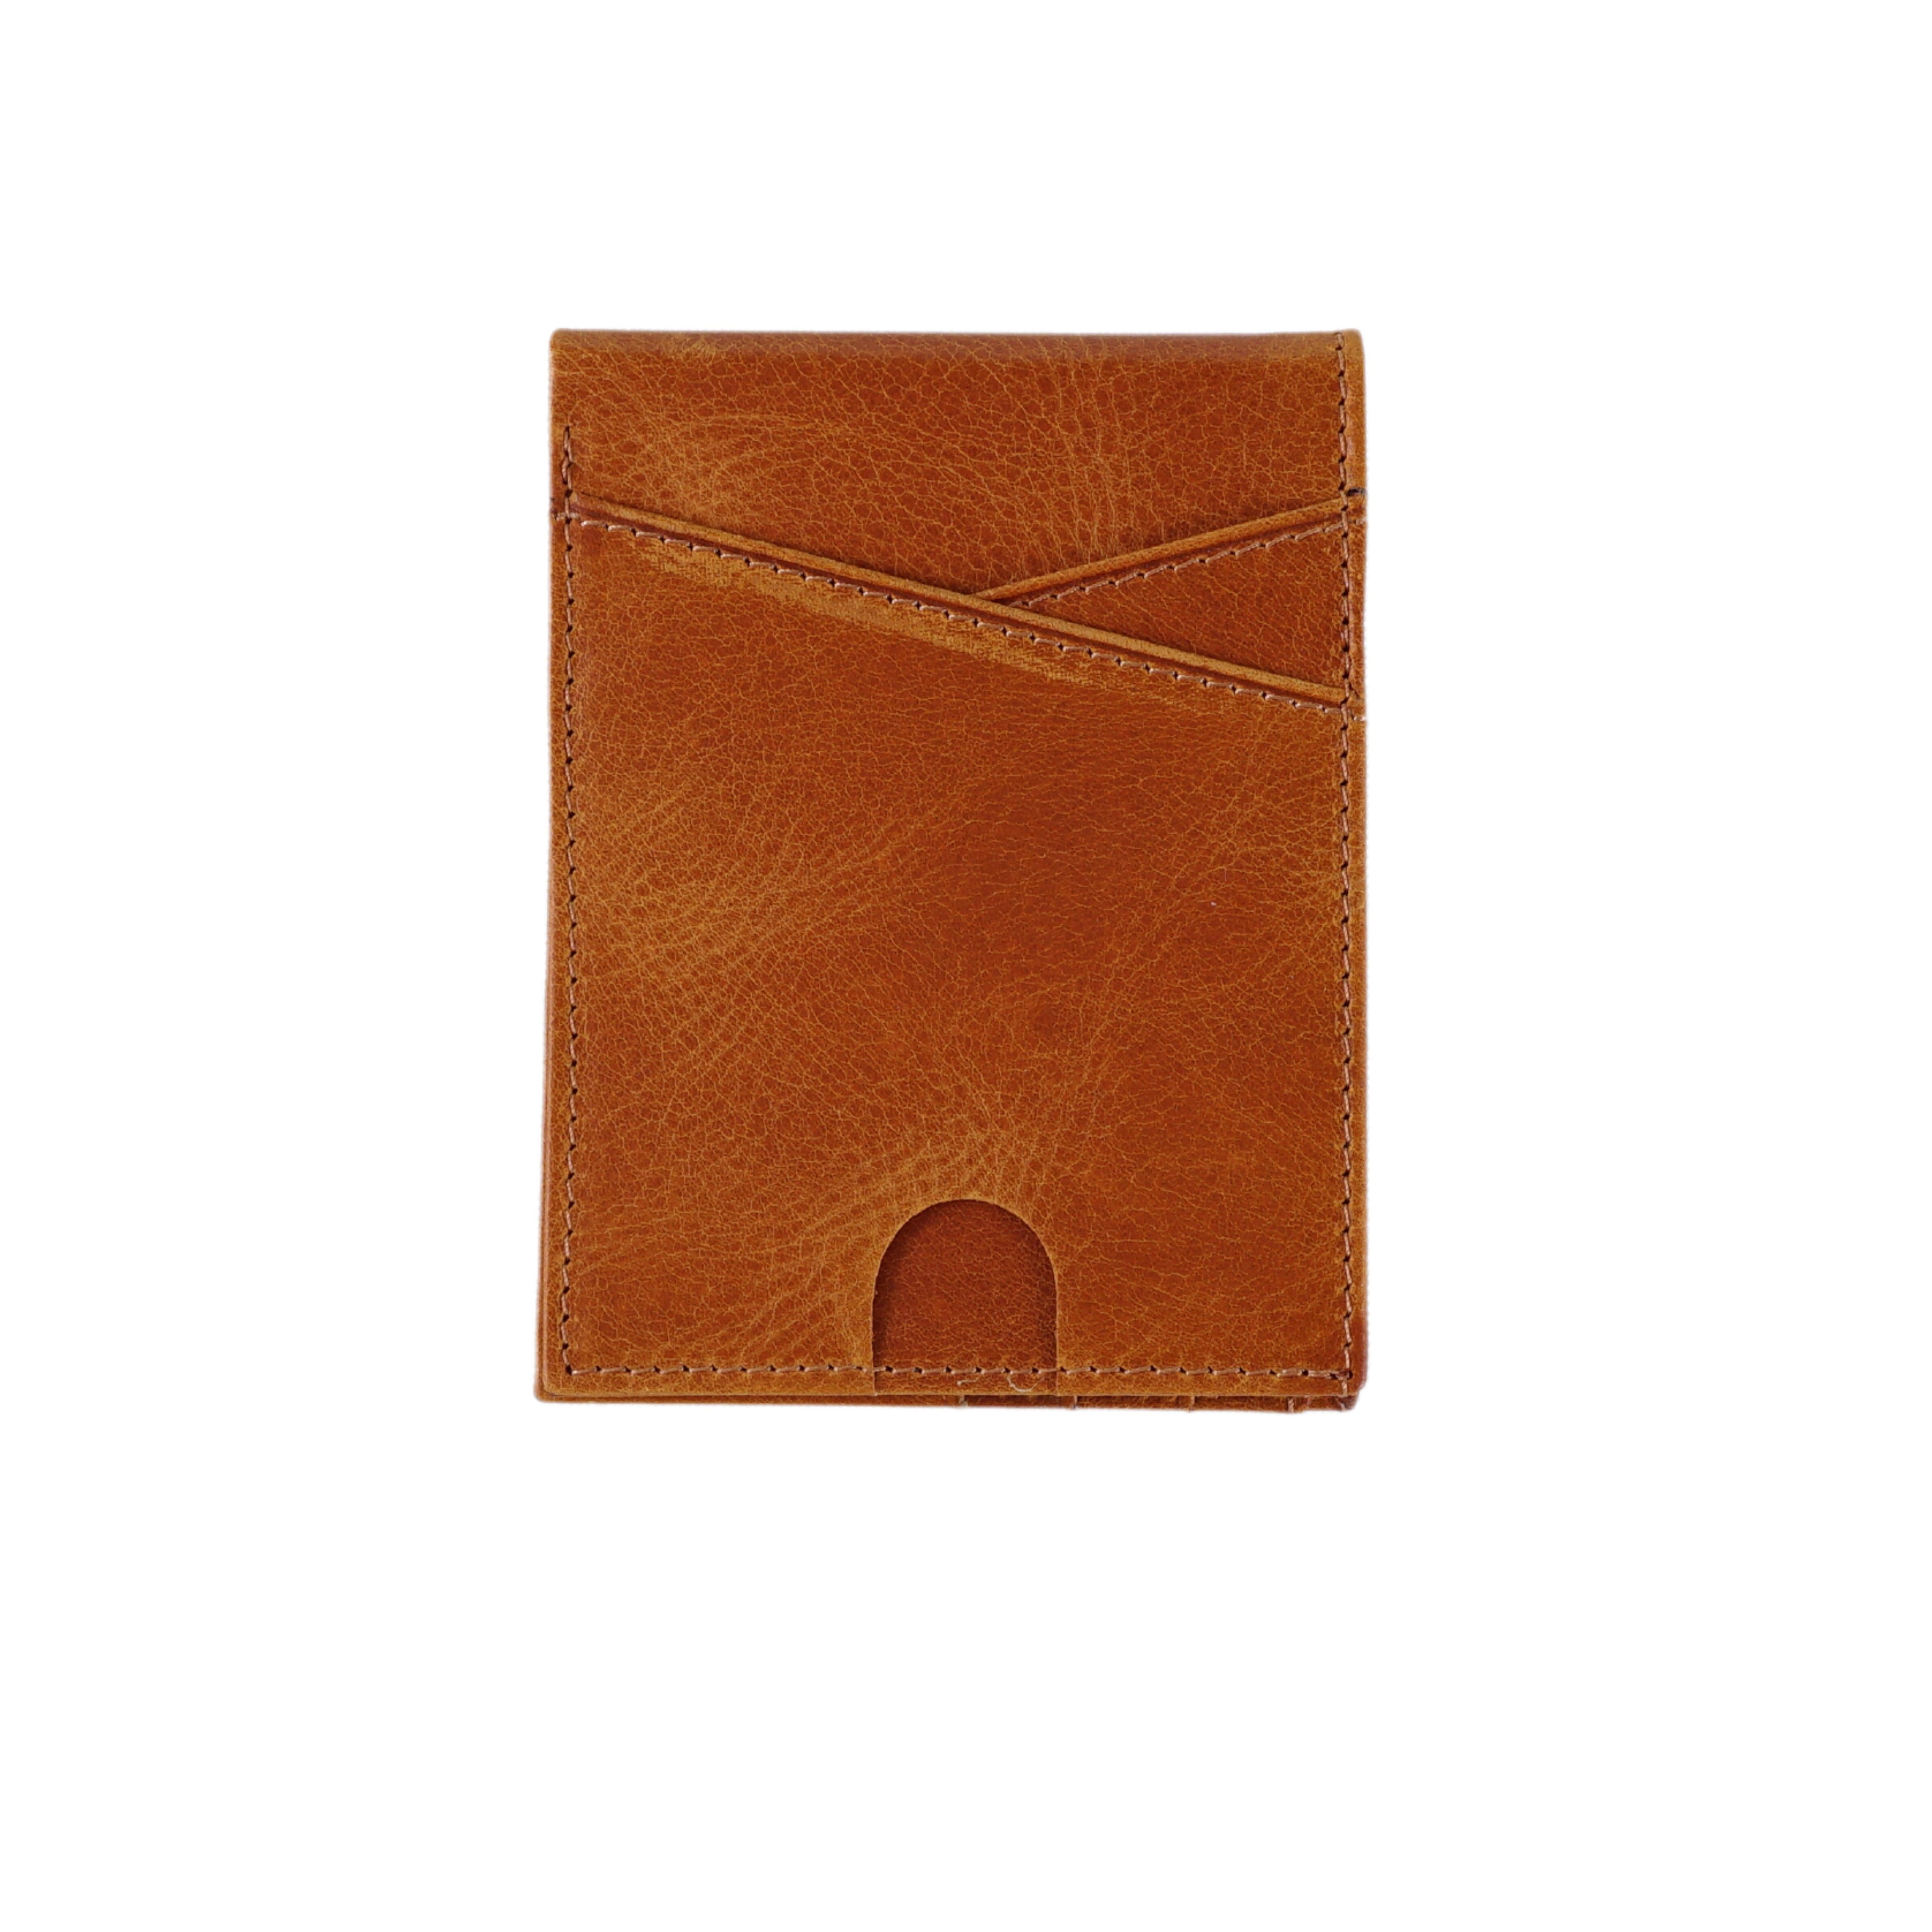 Genuine Leather Minimalist Wallet for Men - Tan